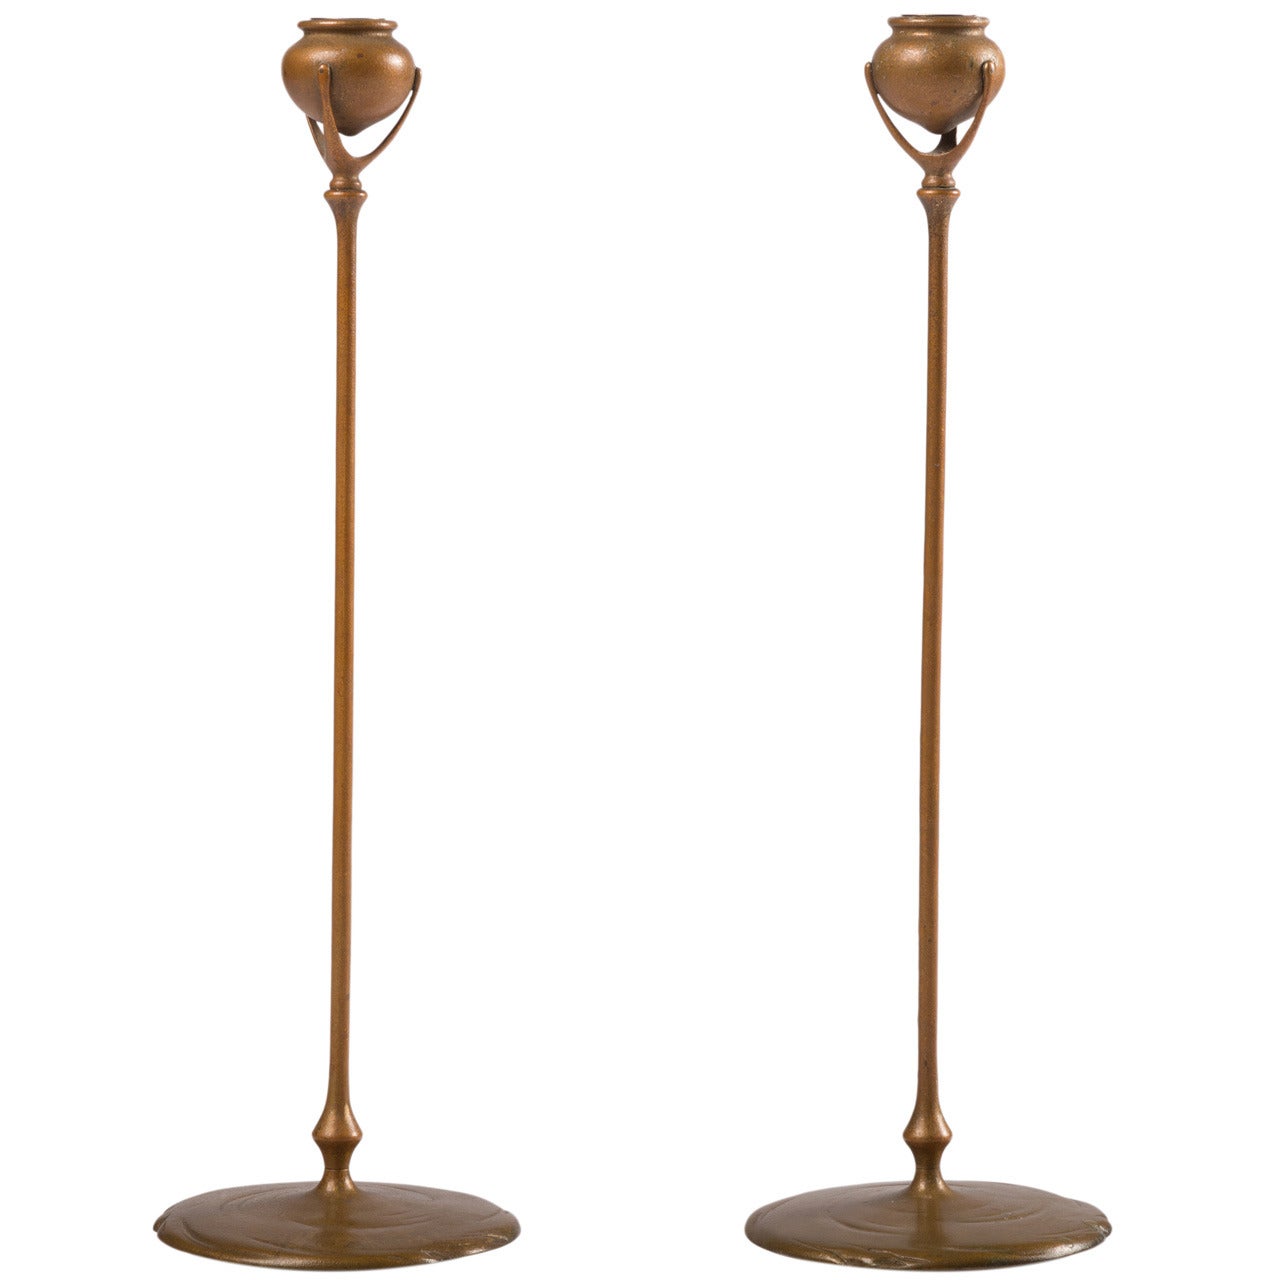 Pair of Gilt Bronze Tiffany "Puddlestick" Candlesticks